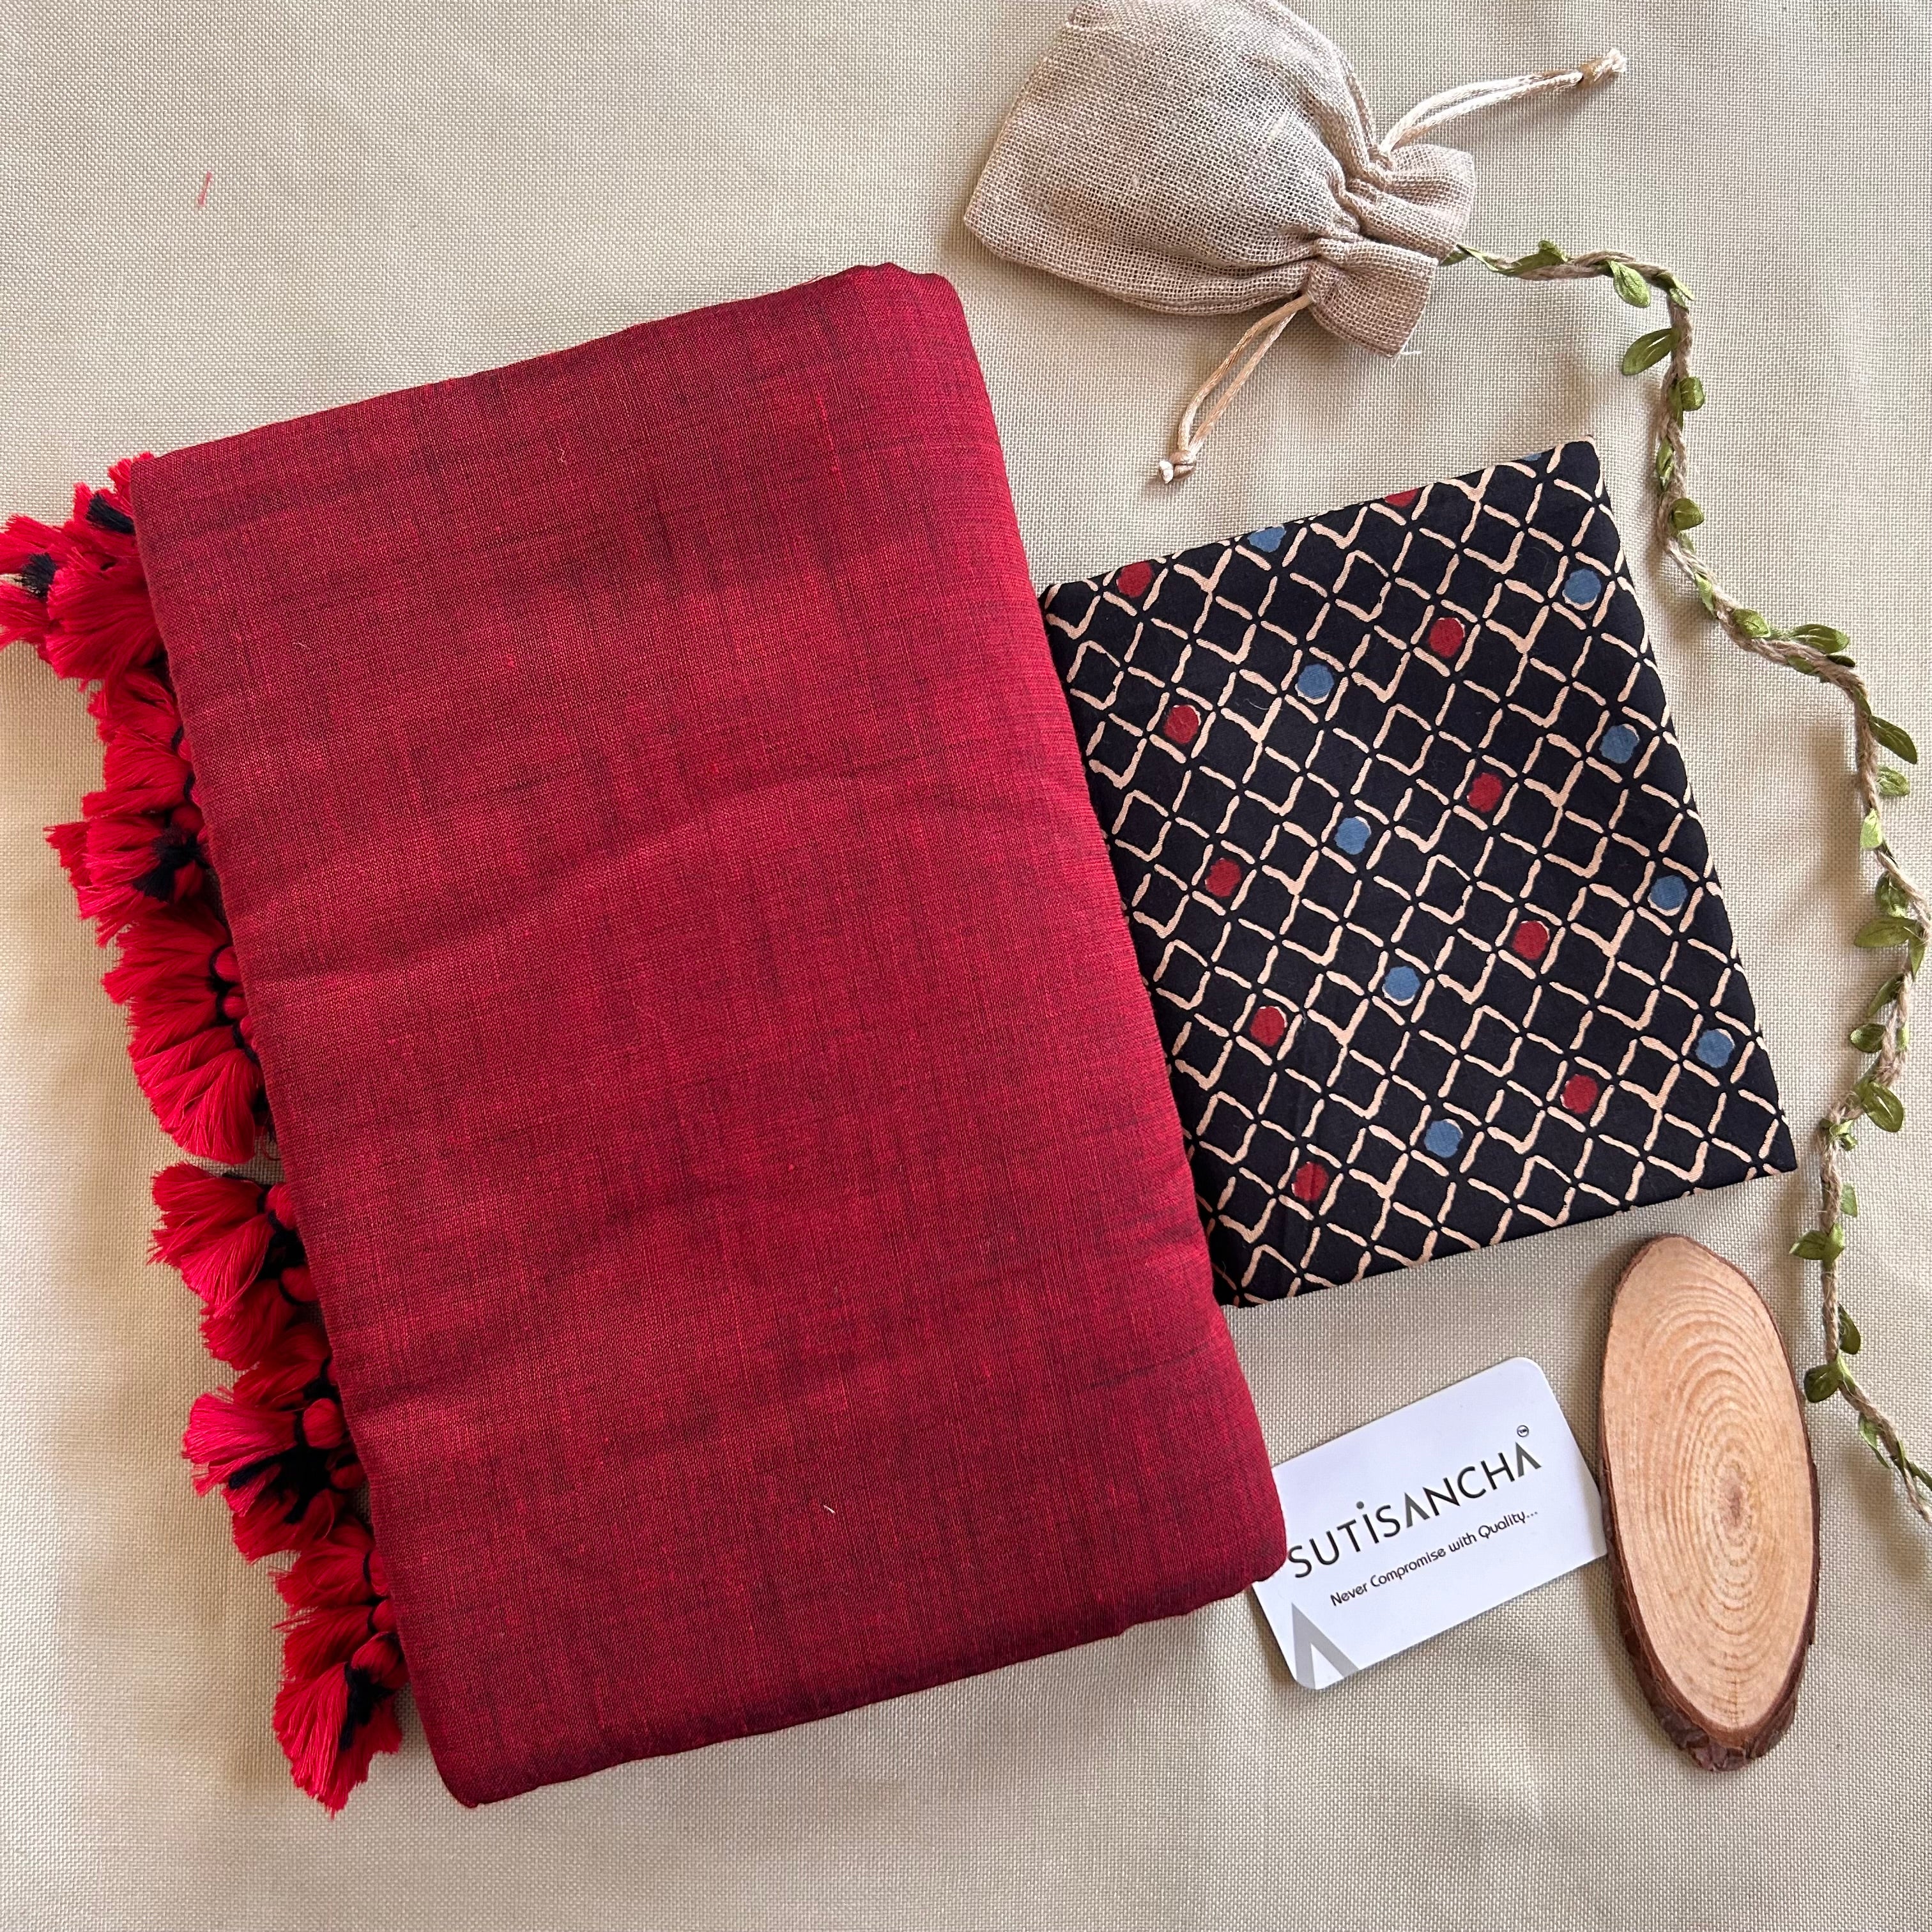 Sutisancha RustRed Handloom Cotton Saree & Designer Blouse